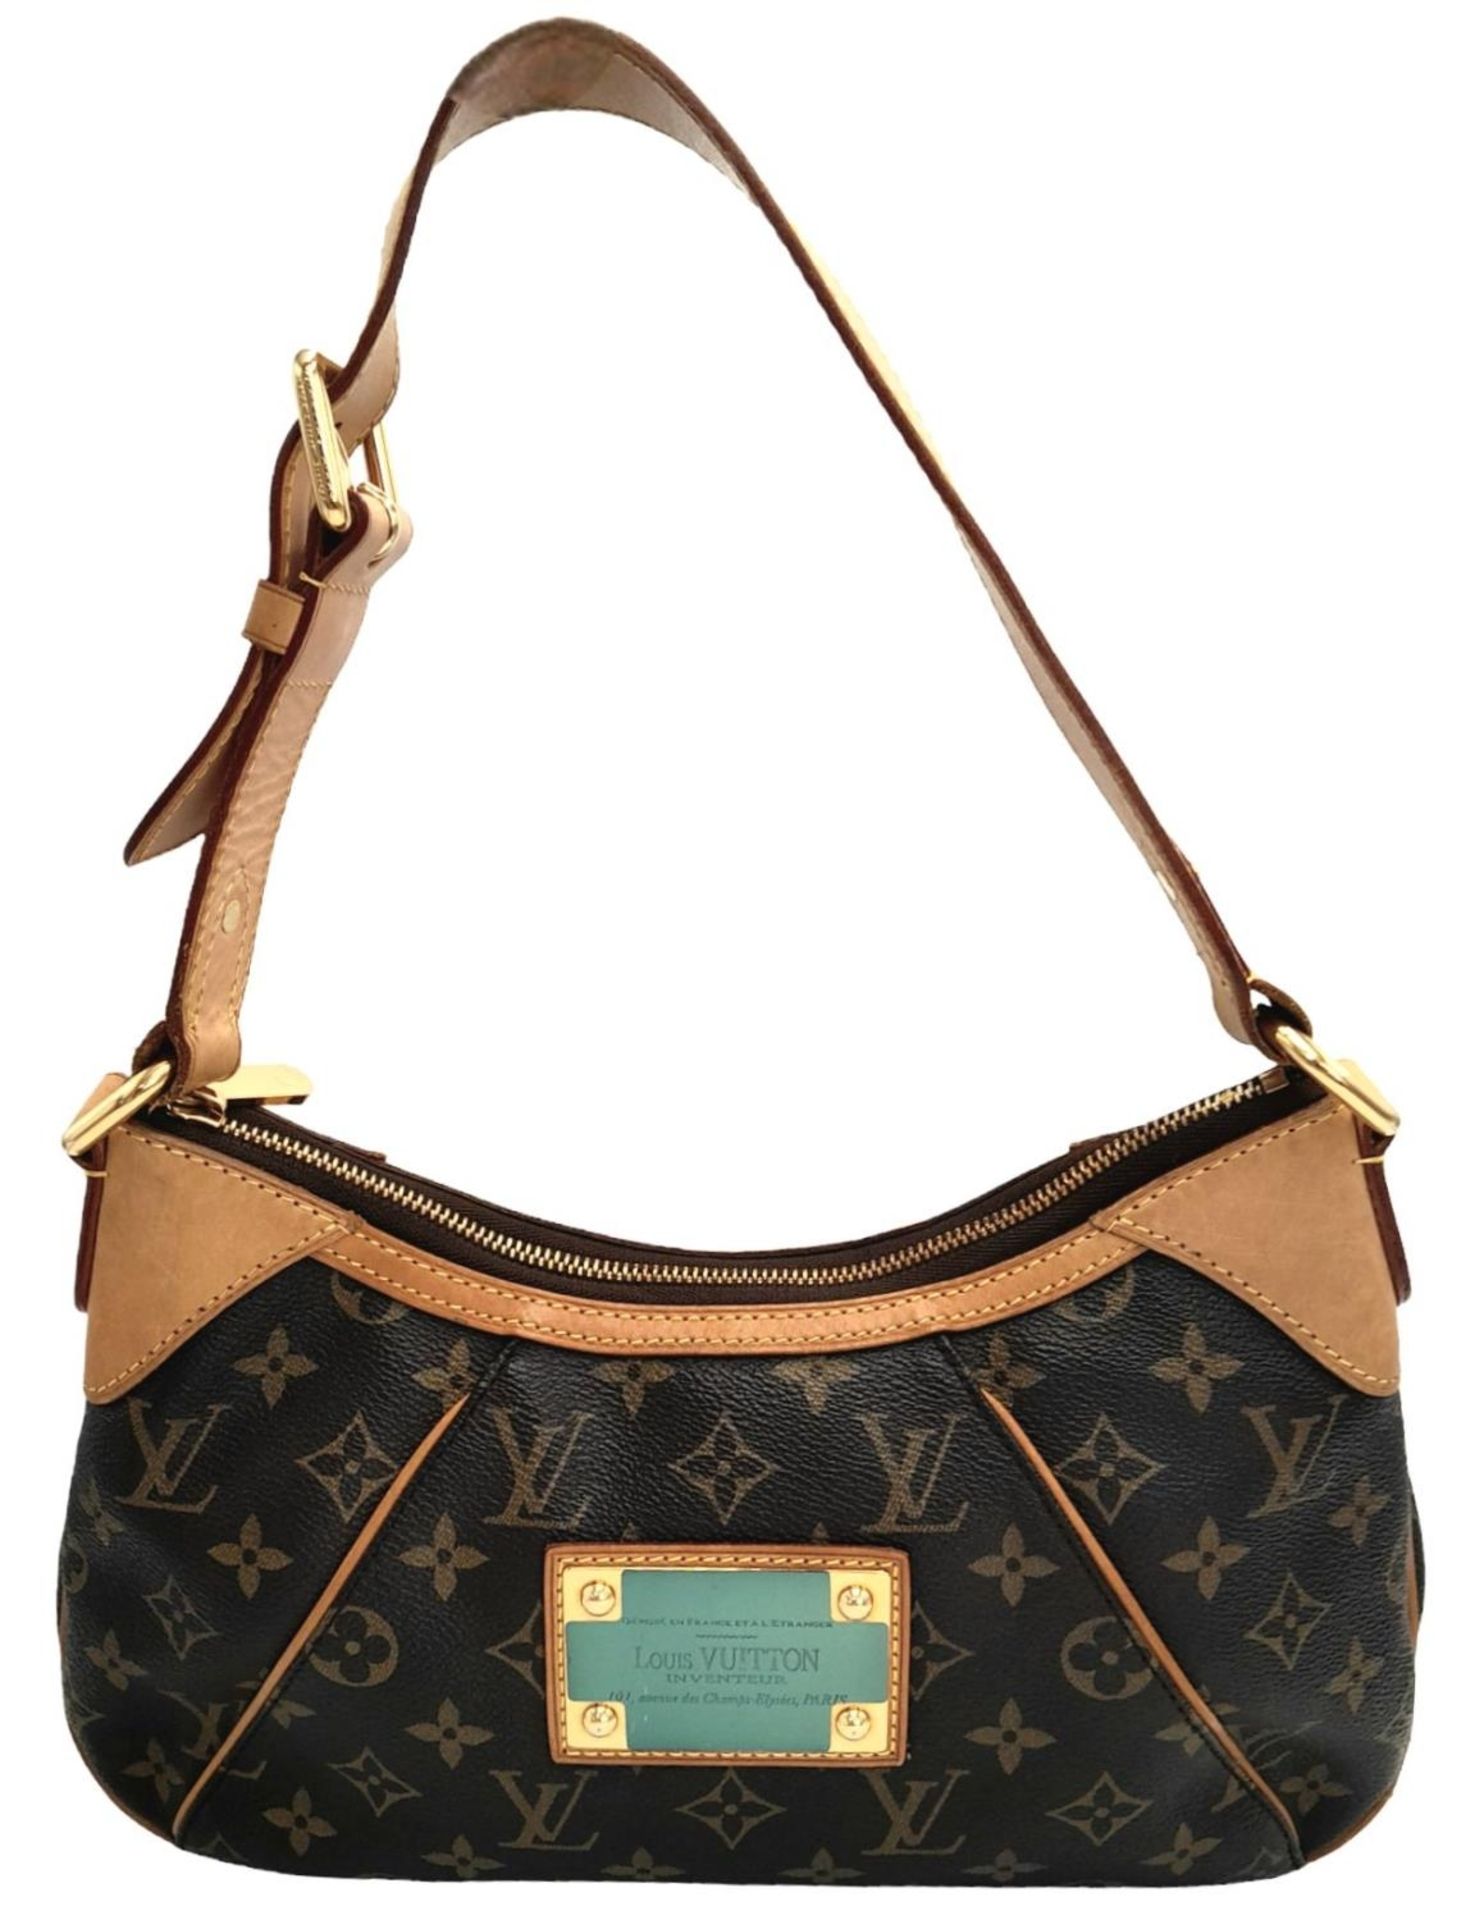 A Louis Vuitton Thames Shoulder Bag. Monogramed canvas exterior with gold-toned hardware, adjustable